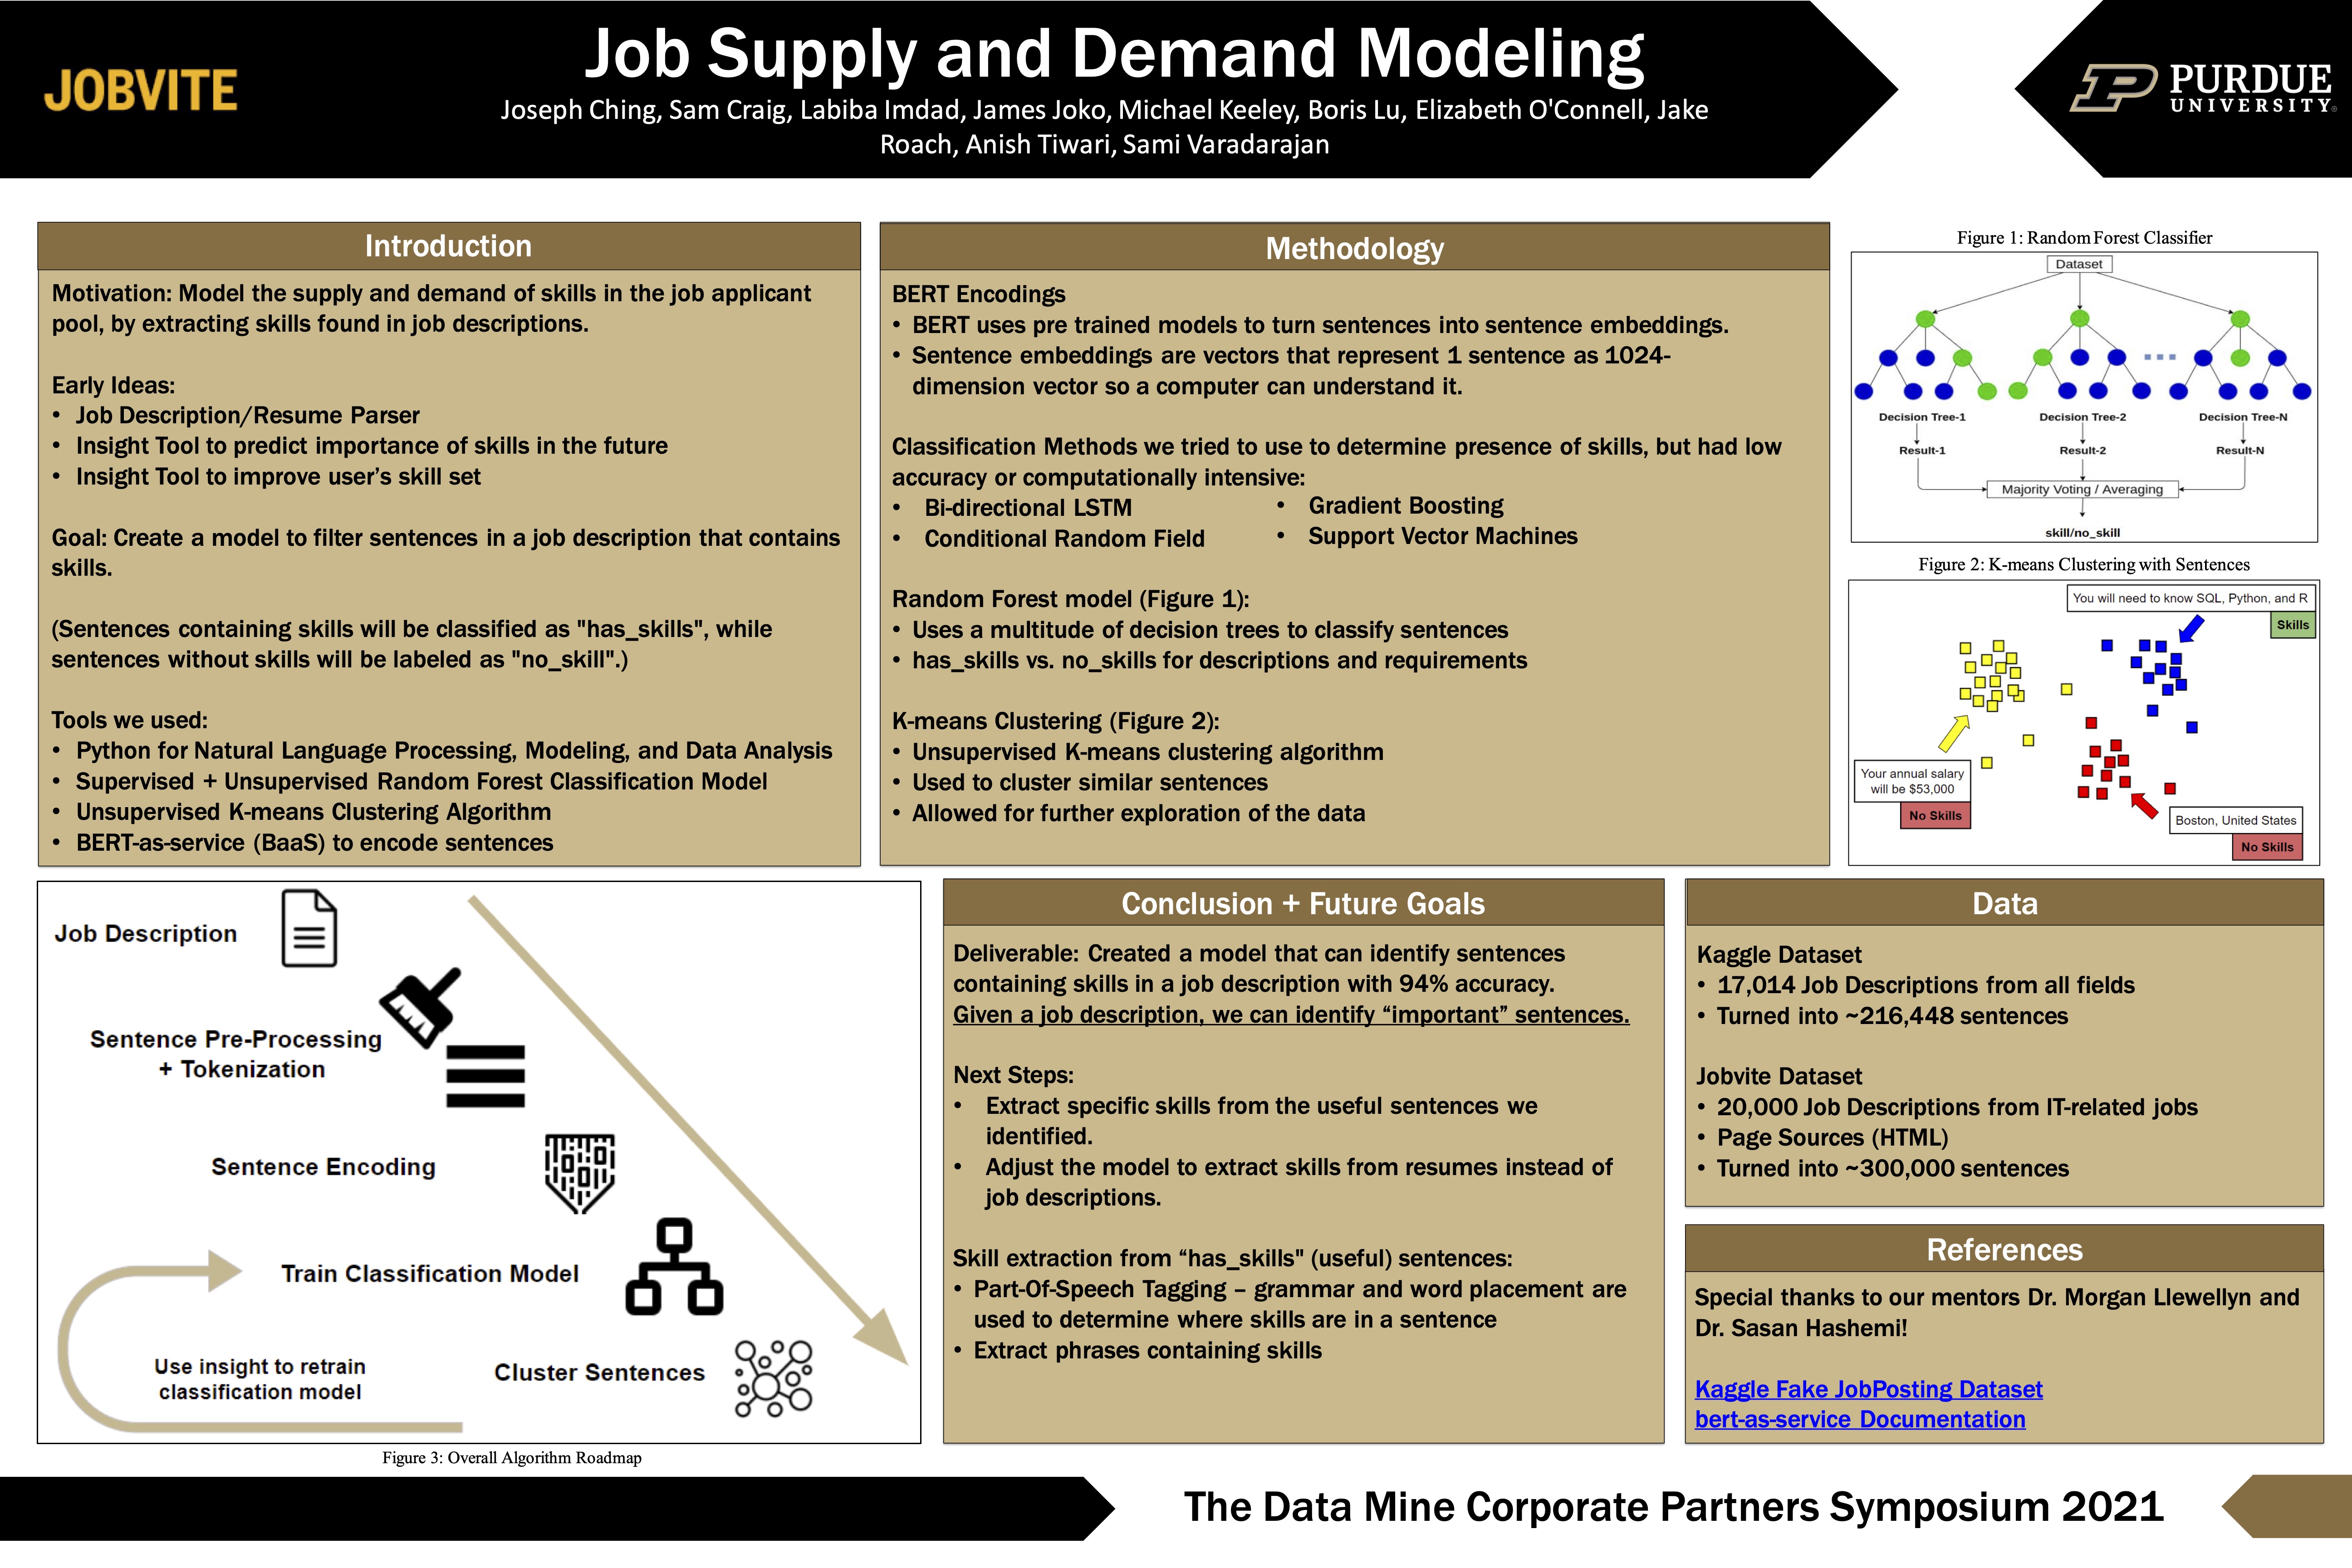 TDM 2022 Jobvite Job Supply and Demand Poster